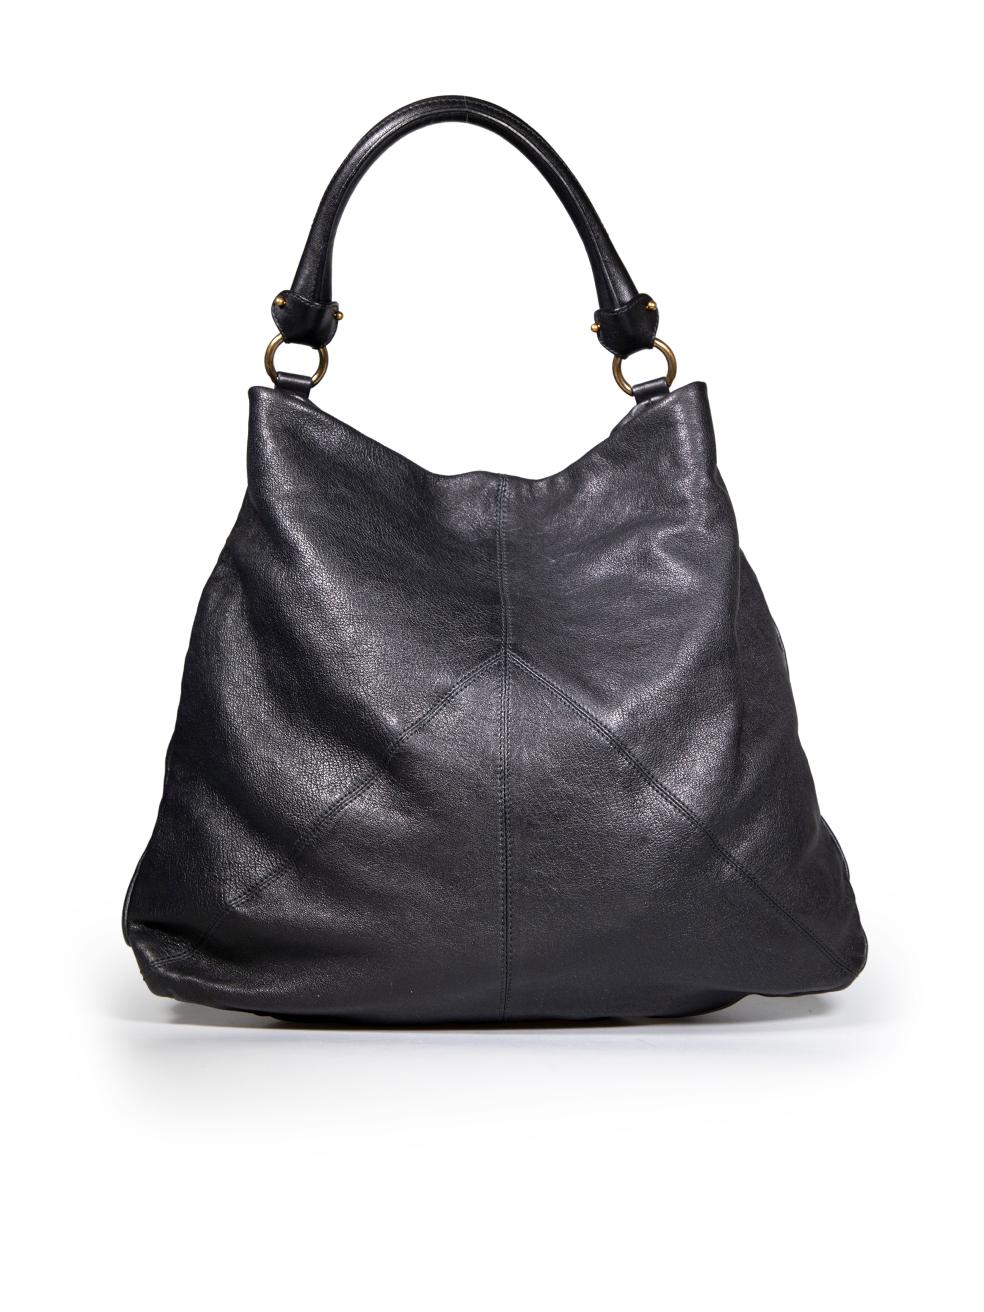 Salvatore Ferragamo Black Leather Miss Vara Hobo Bag In Good Condition For Sale In London, GB